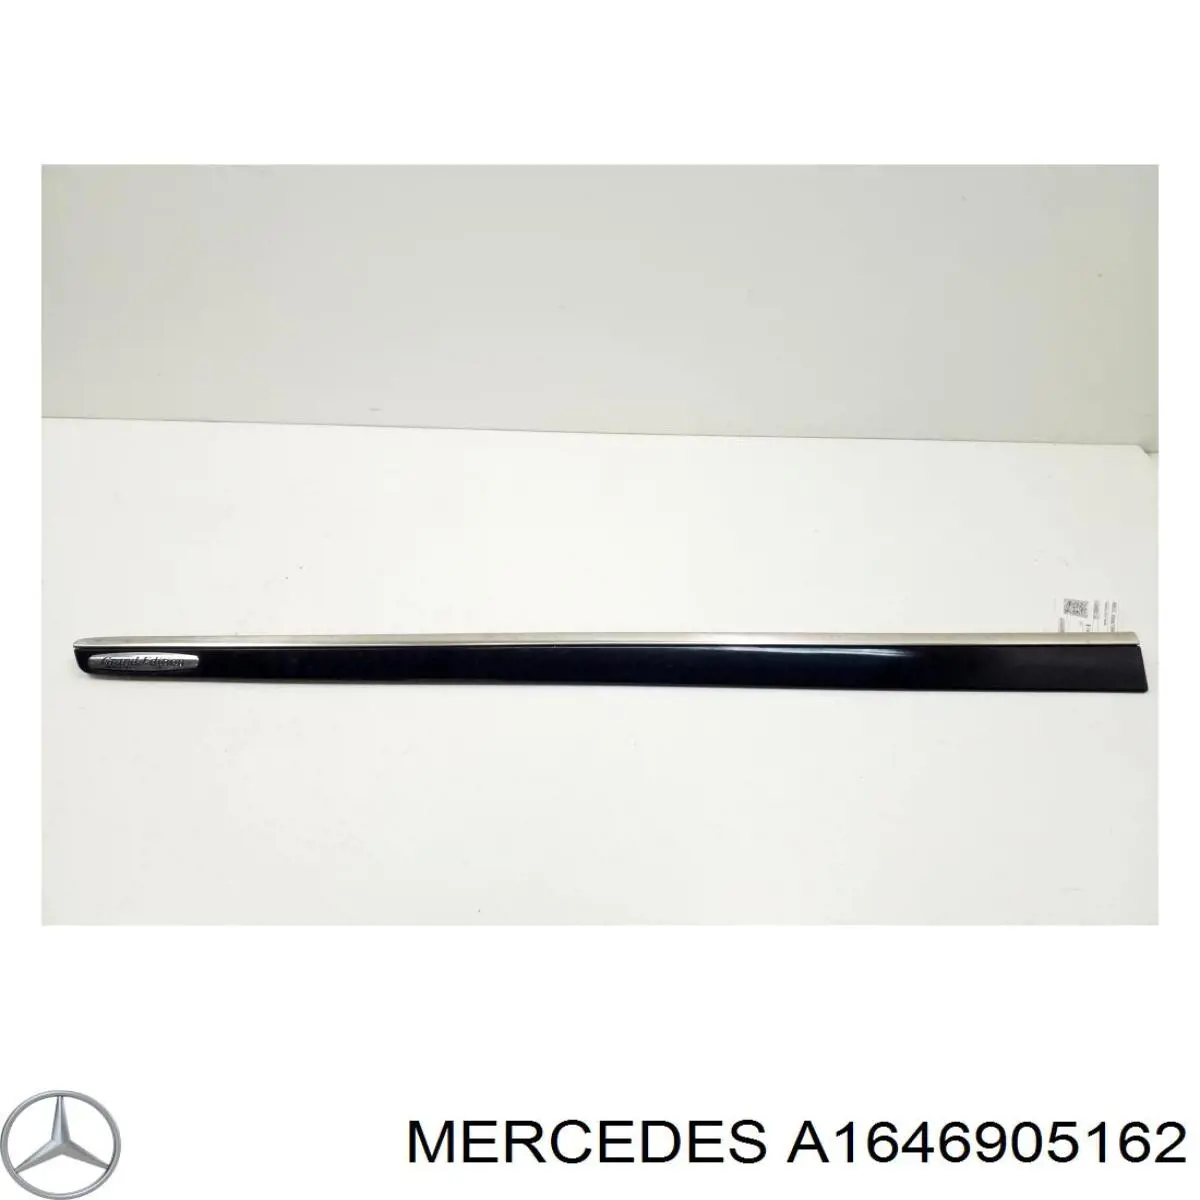 16469051629999 Mercedes moldura da porta dianteira esquerda